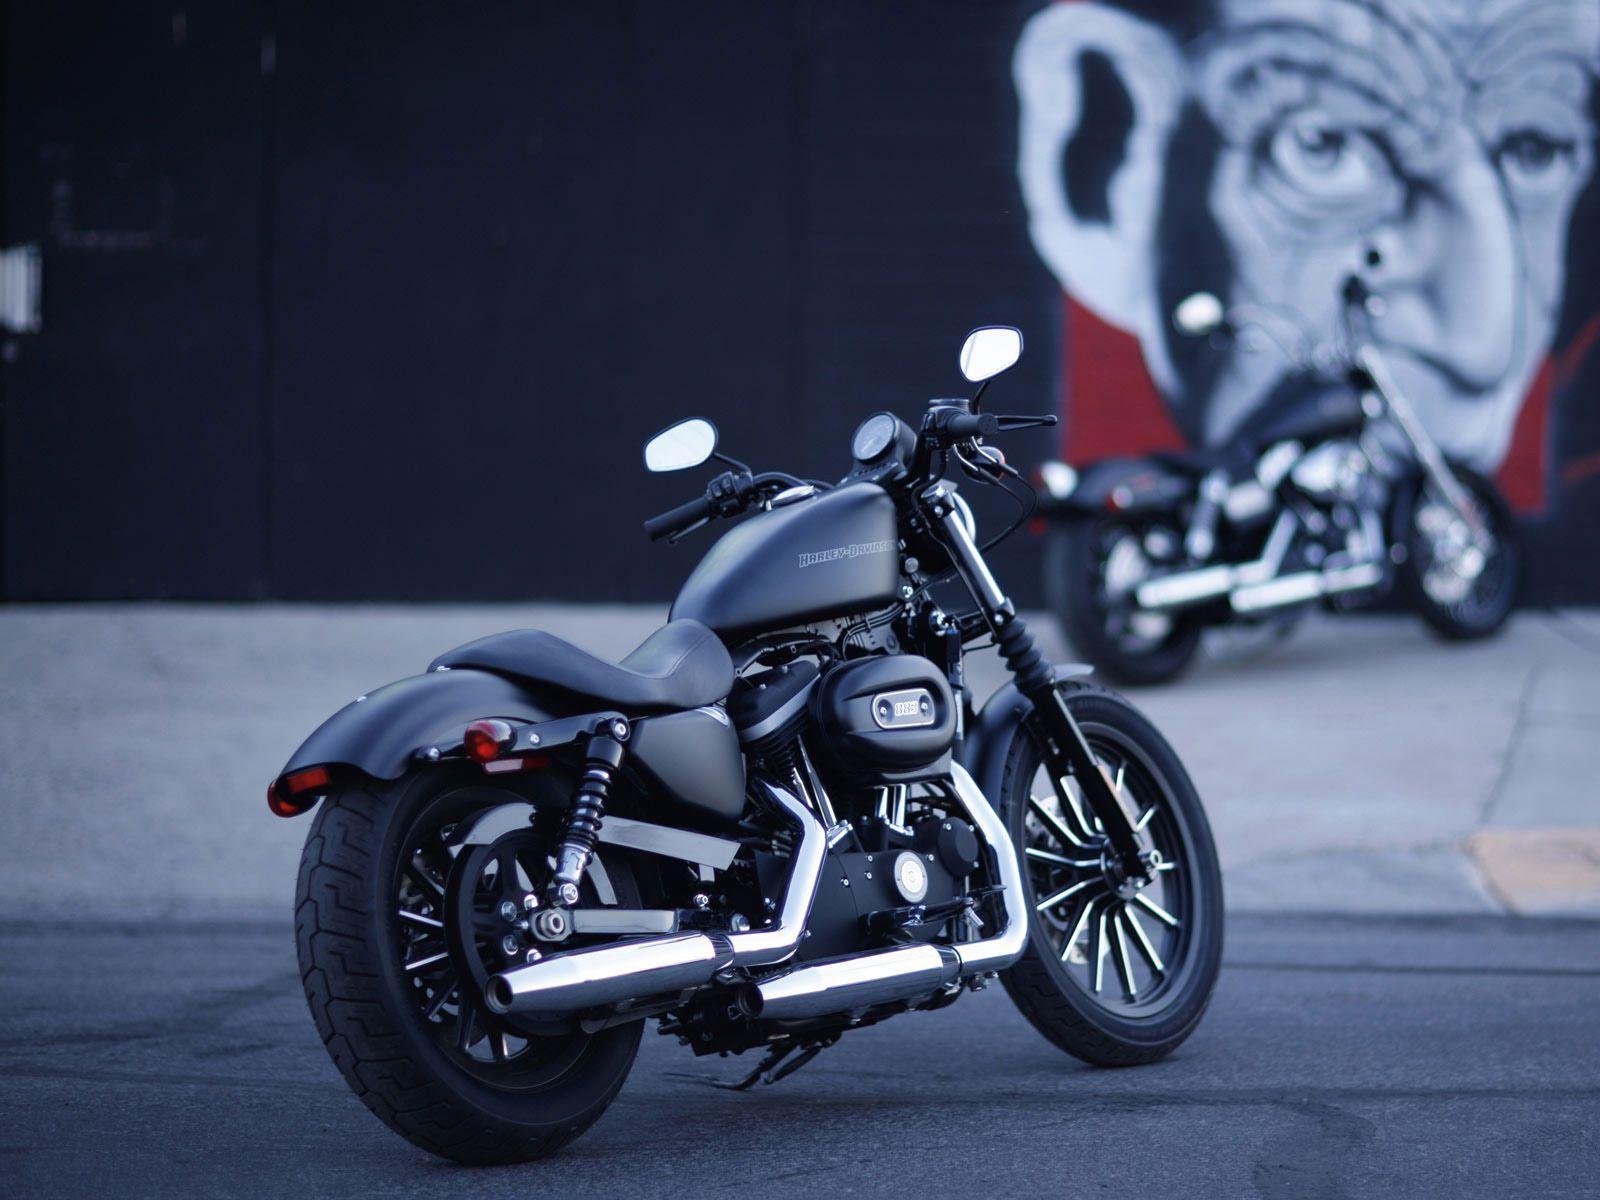 Harley Davidson Bikes Wallpaper. Ultra High Quality Wallpaper